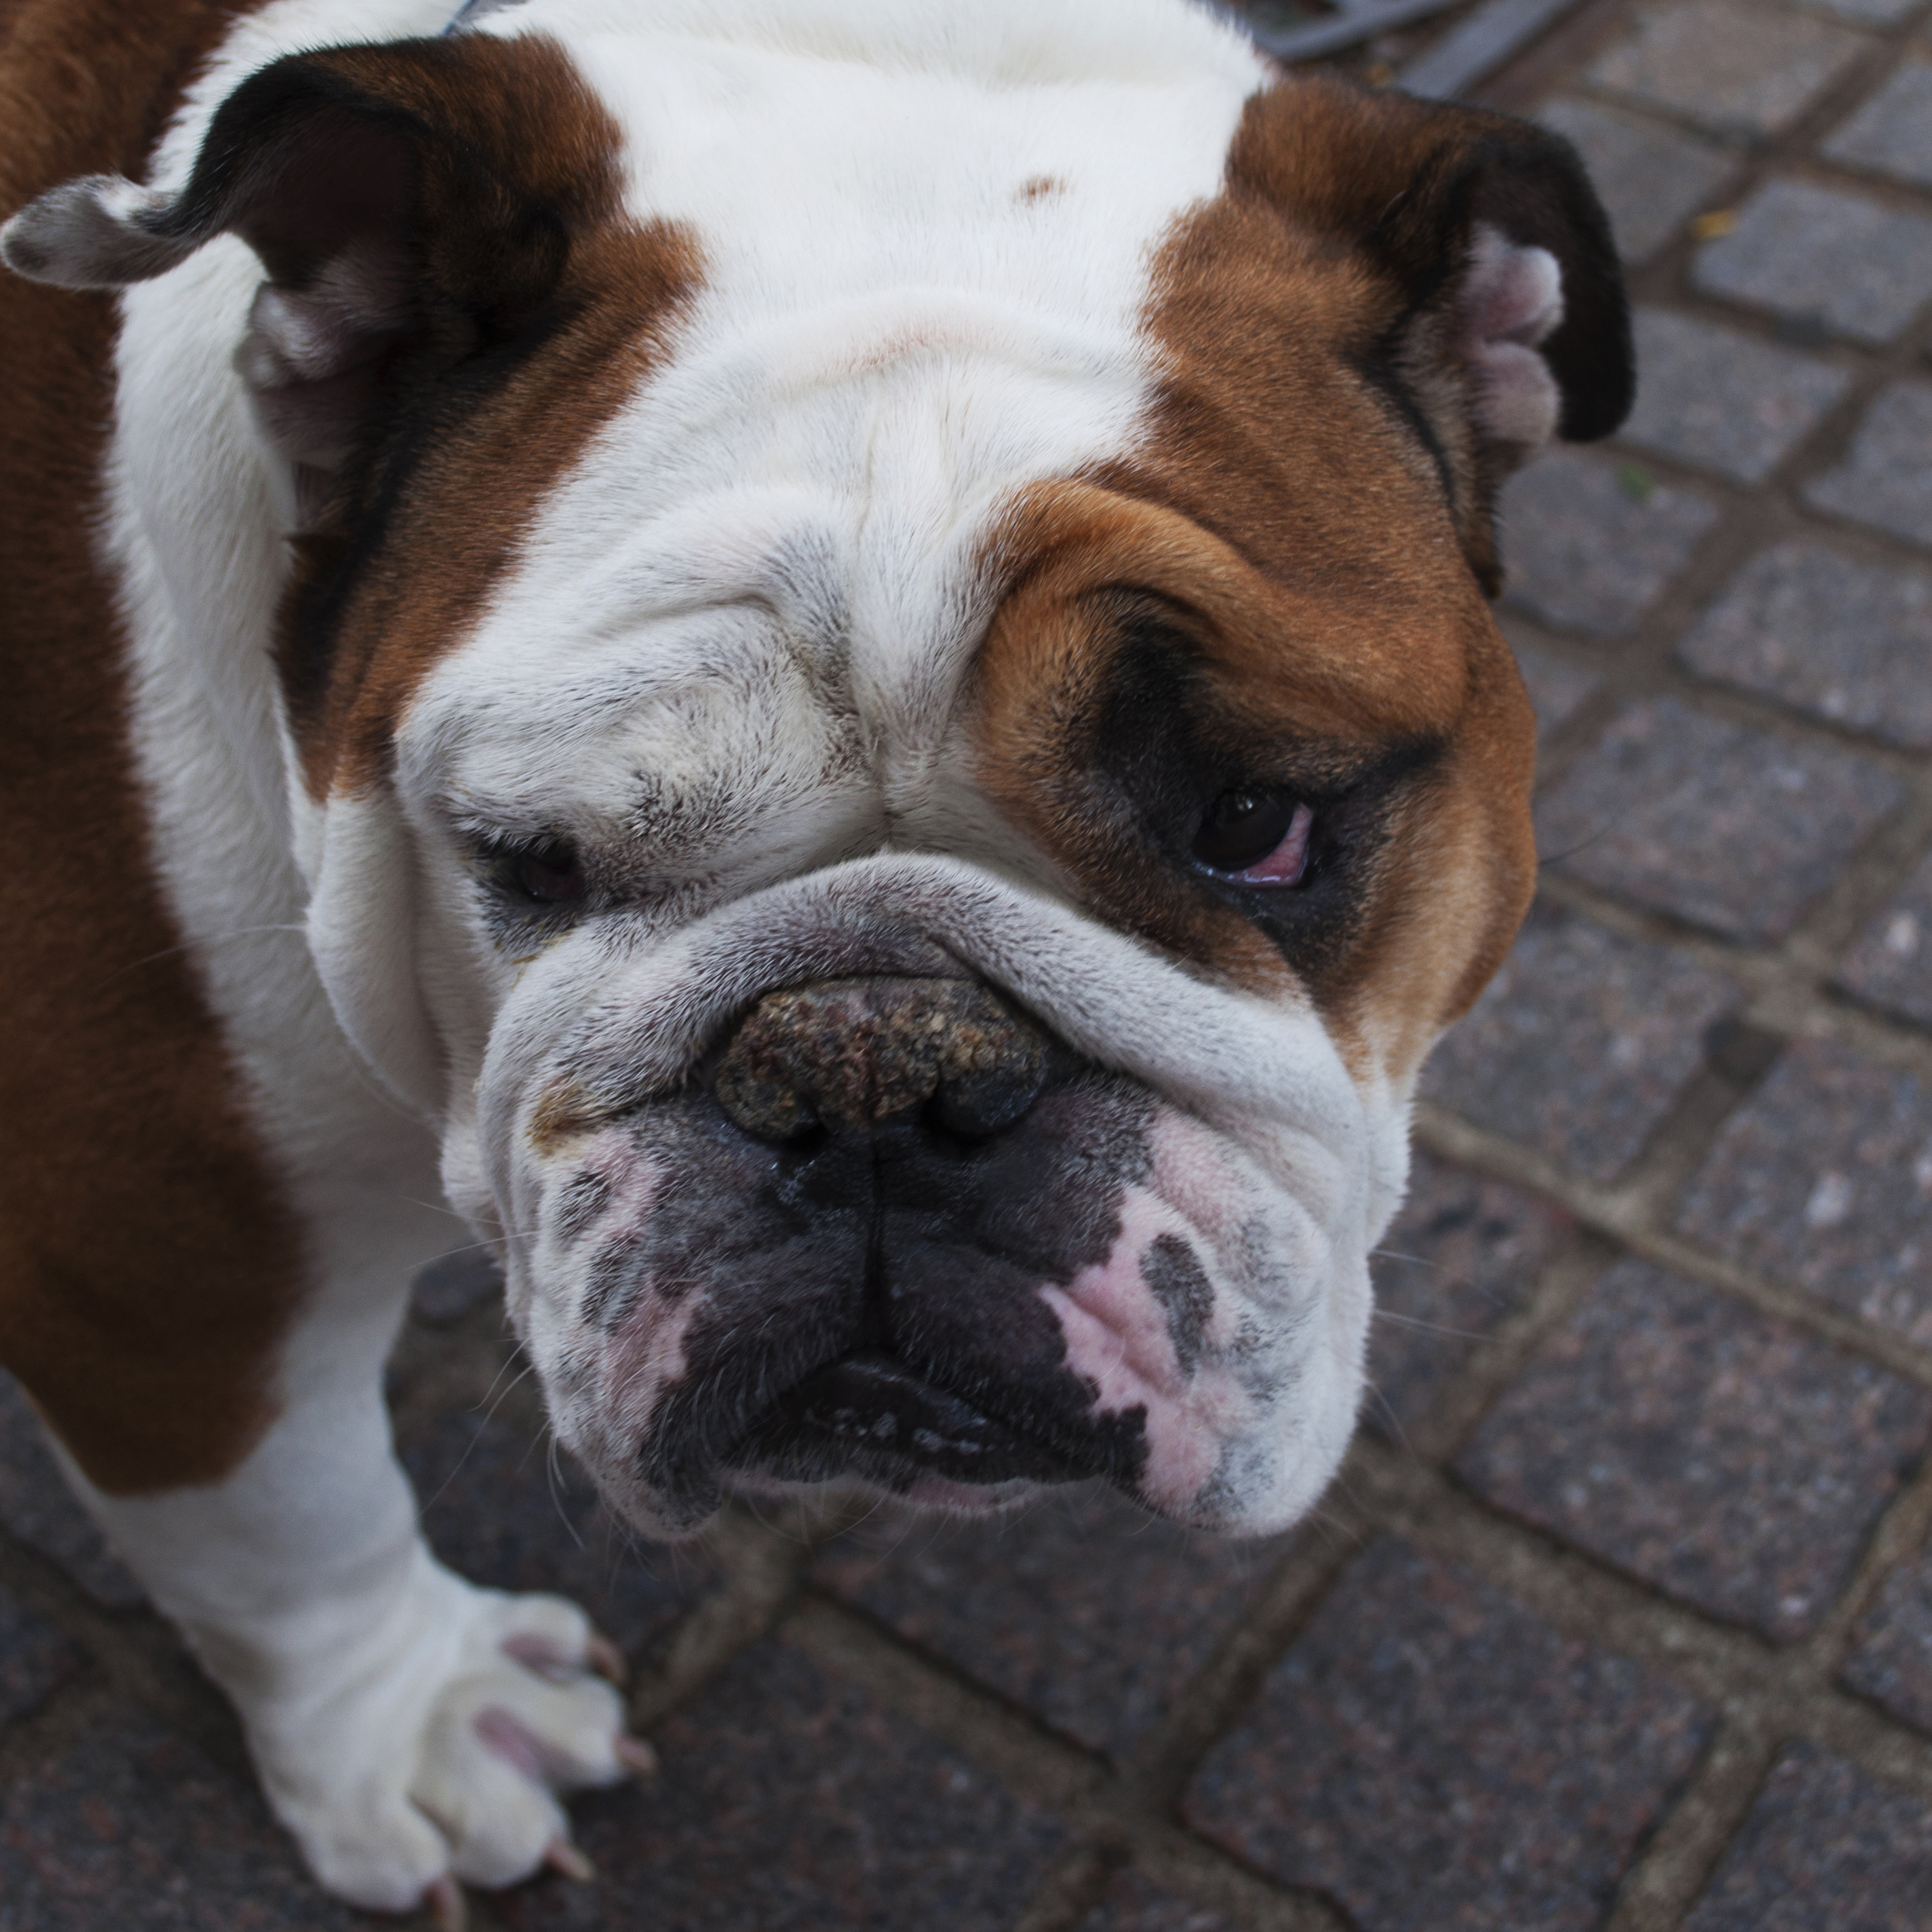 Winston the bulldog on Newbury Street Boston